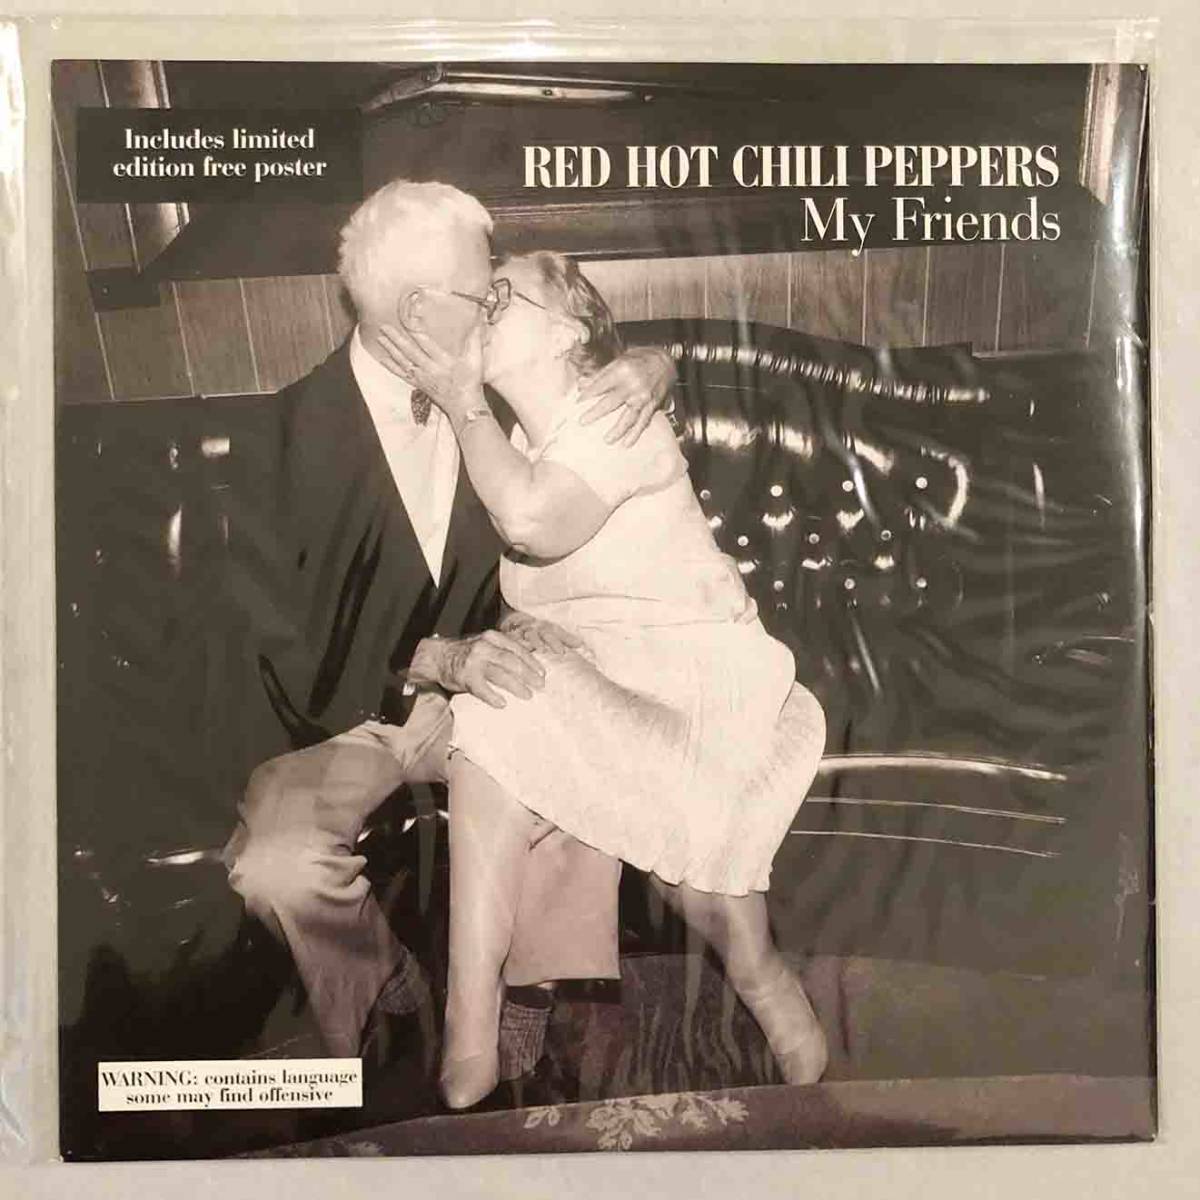 #1995 год UK запись оригинал новый товар защита RED HOT CHILI PEPPERS - My Friends 12~EP Limited Edition Poster W0317TX Warner Bros